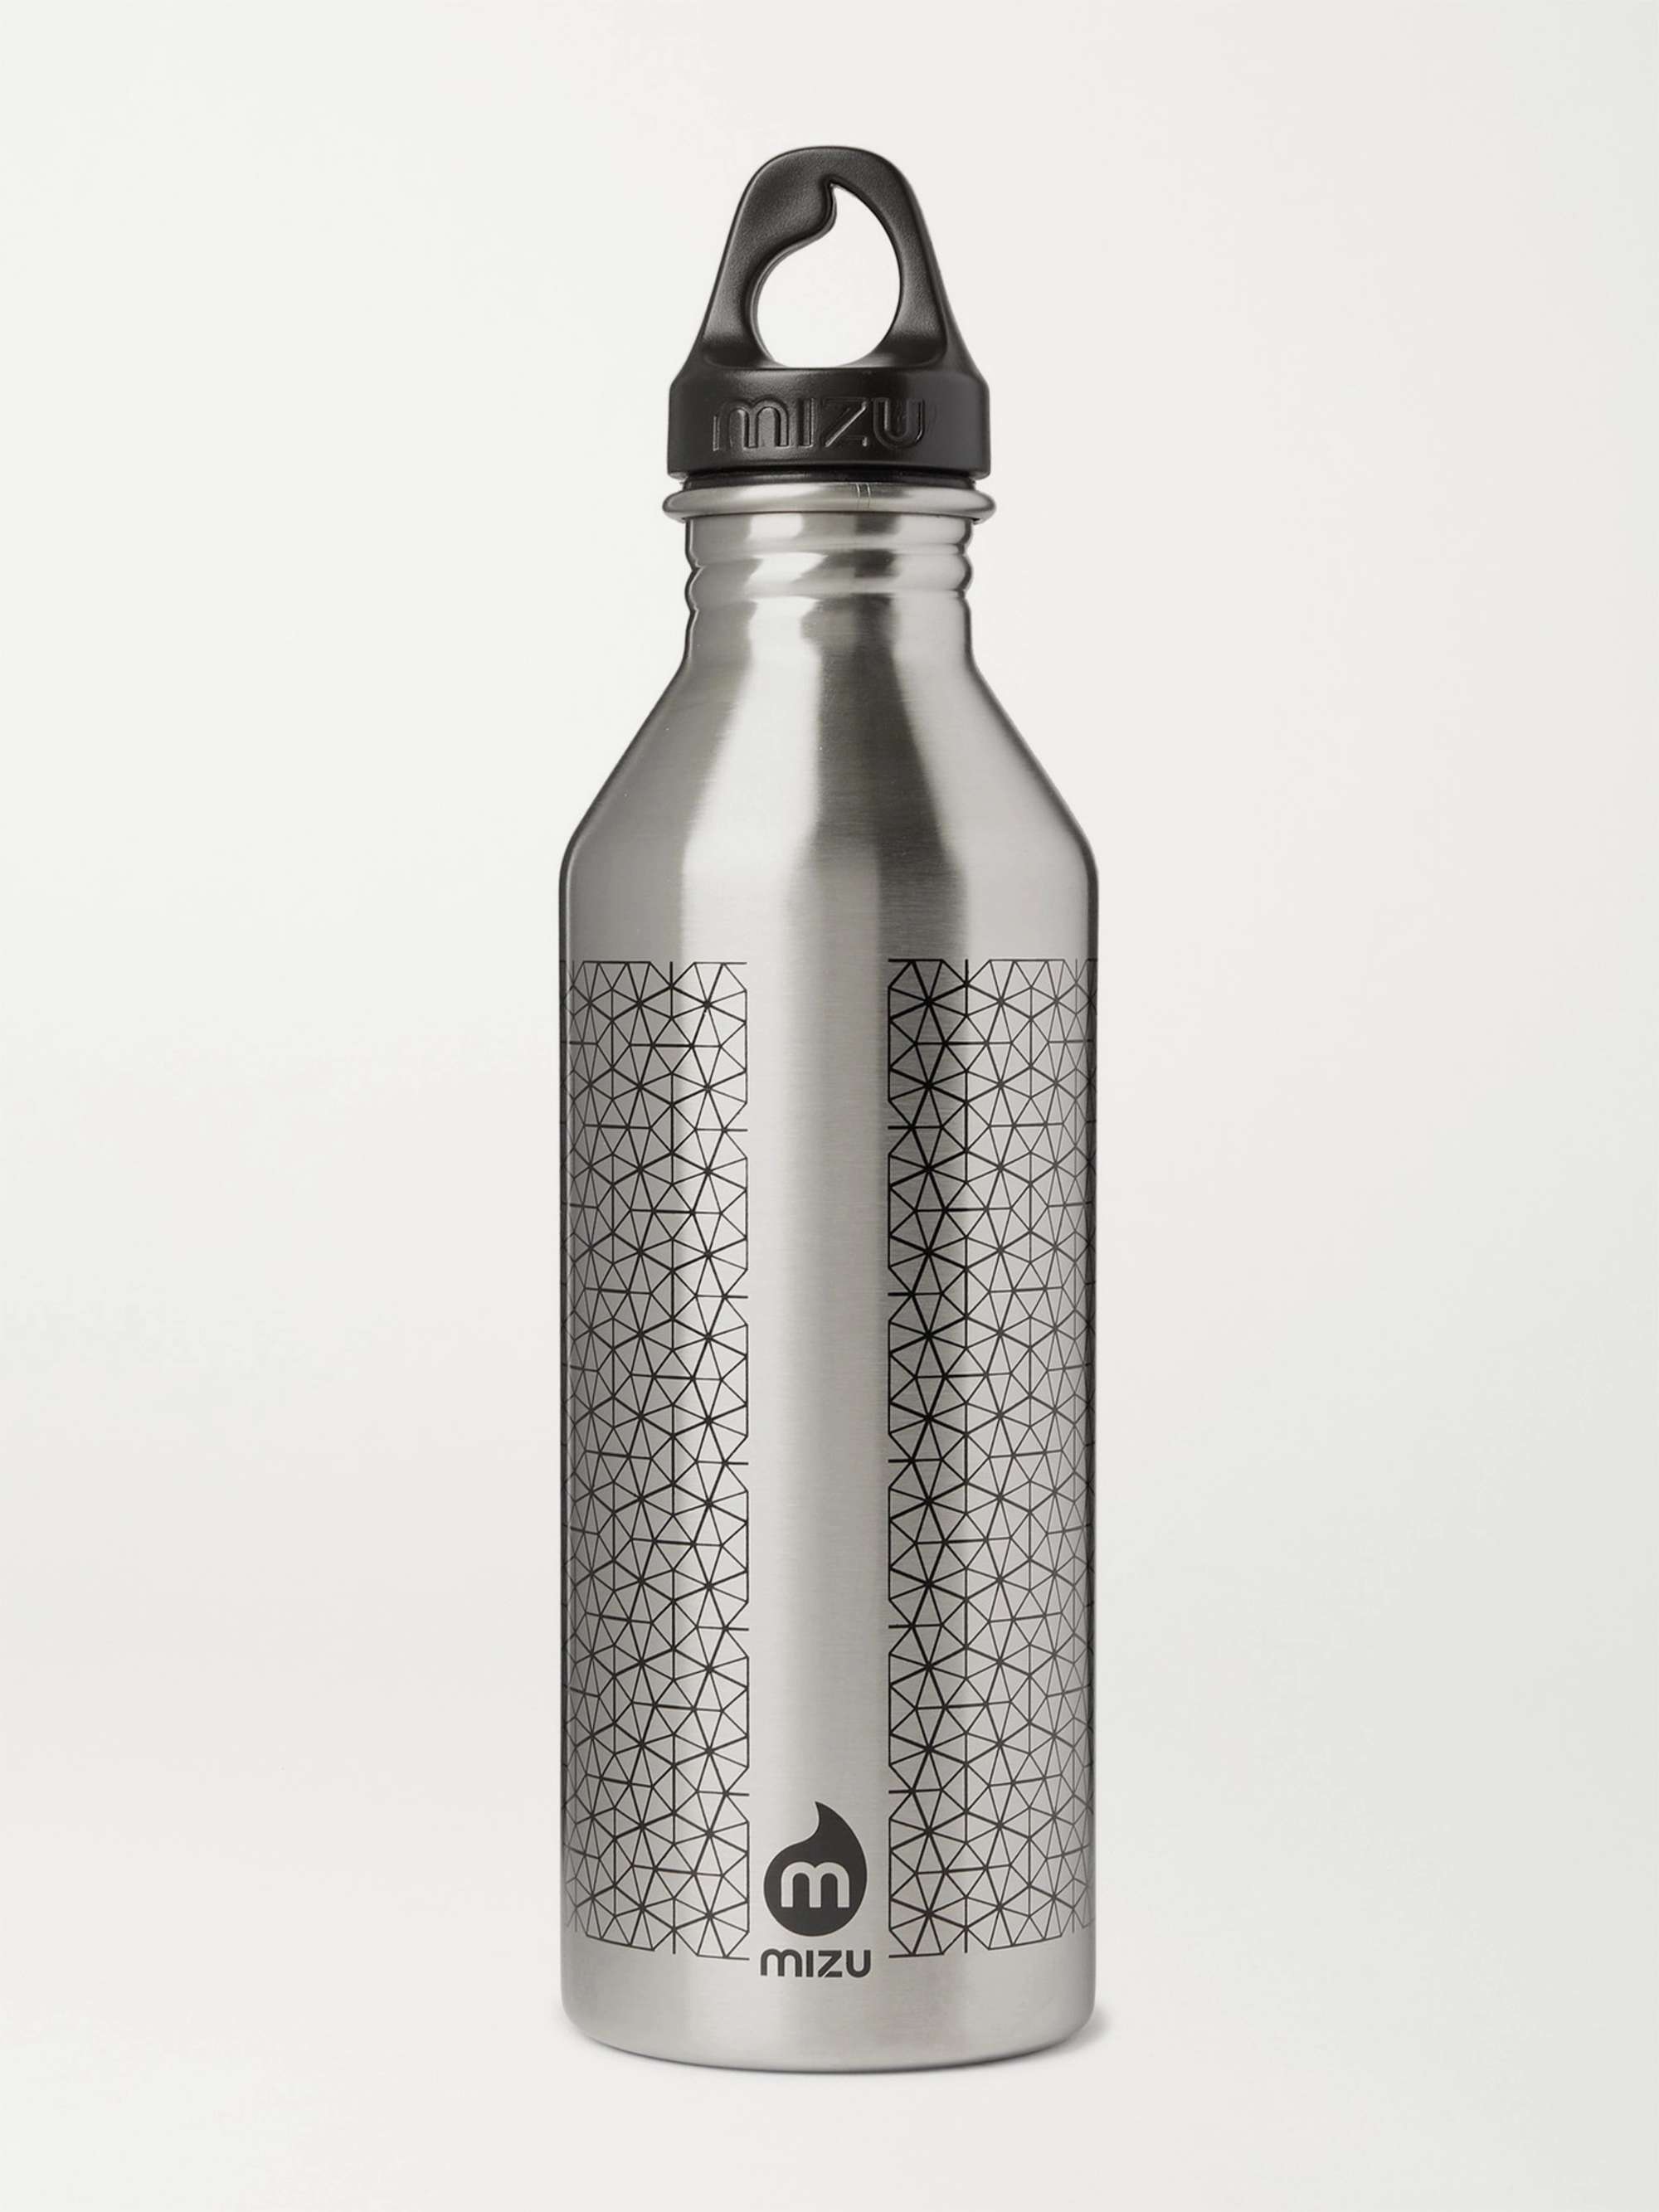 HEIMPLANET Printed Stainless Steel Water Bottle, 750ml